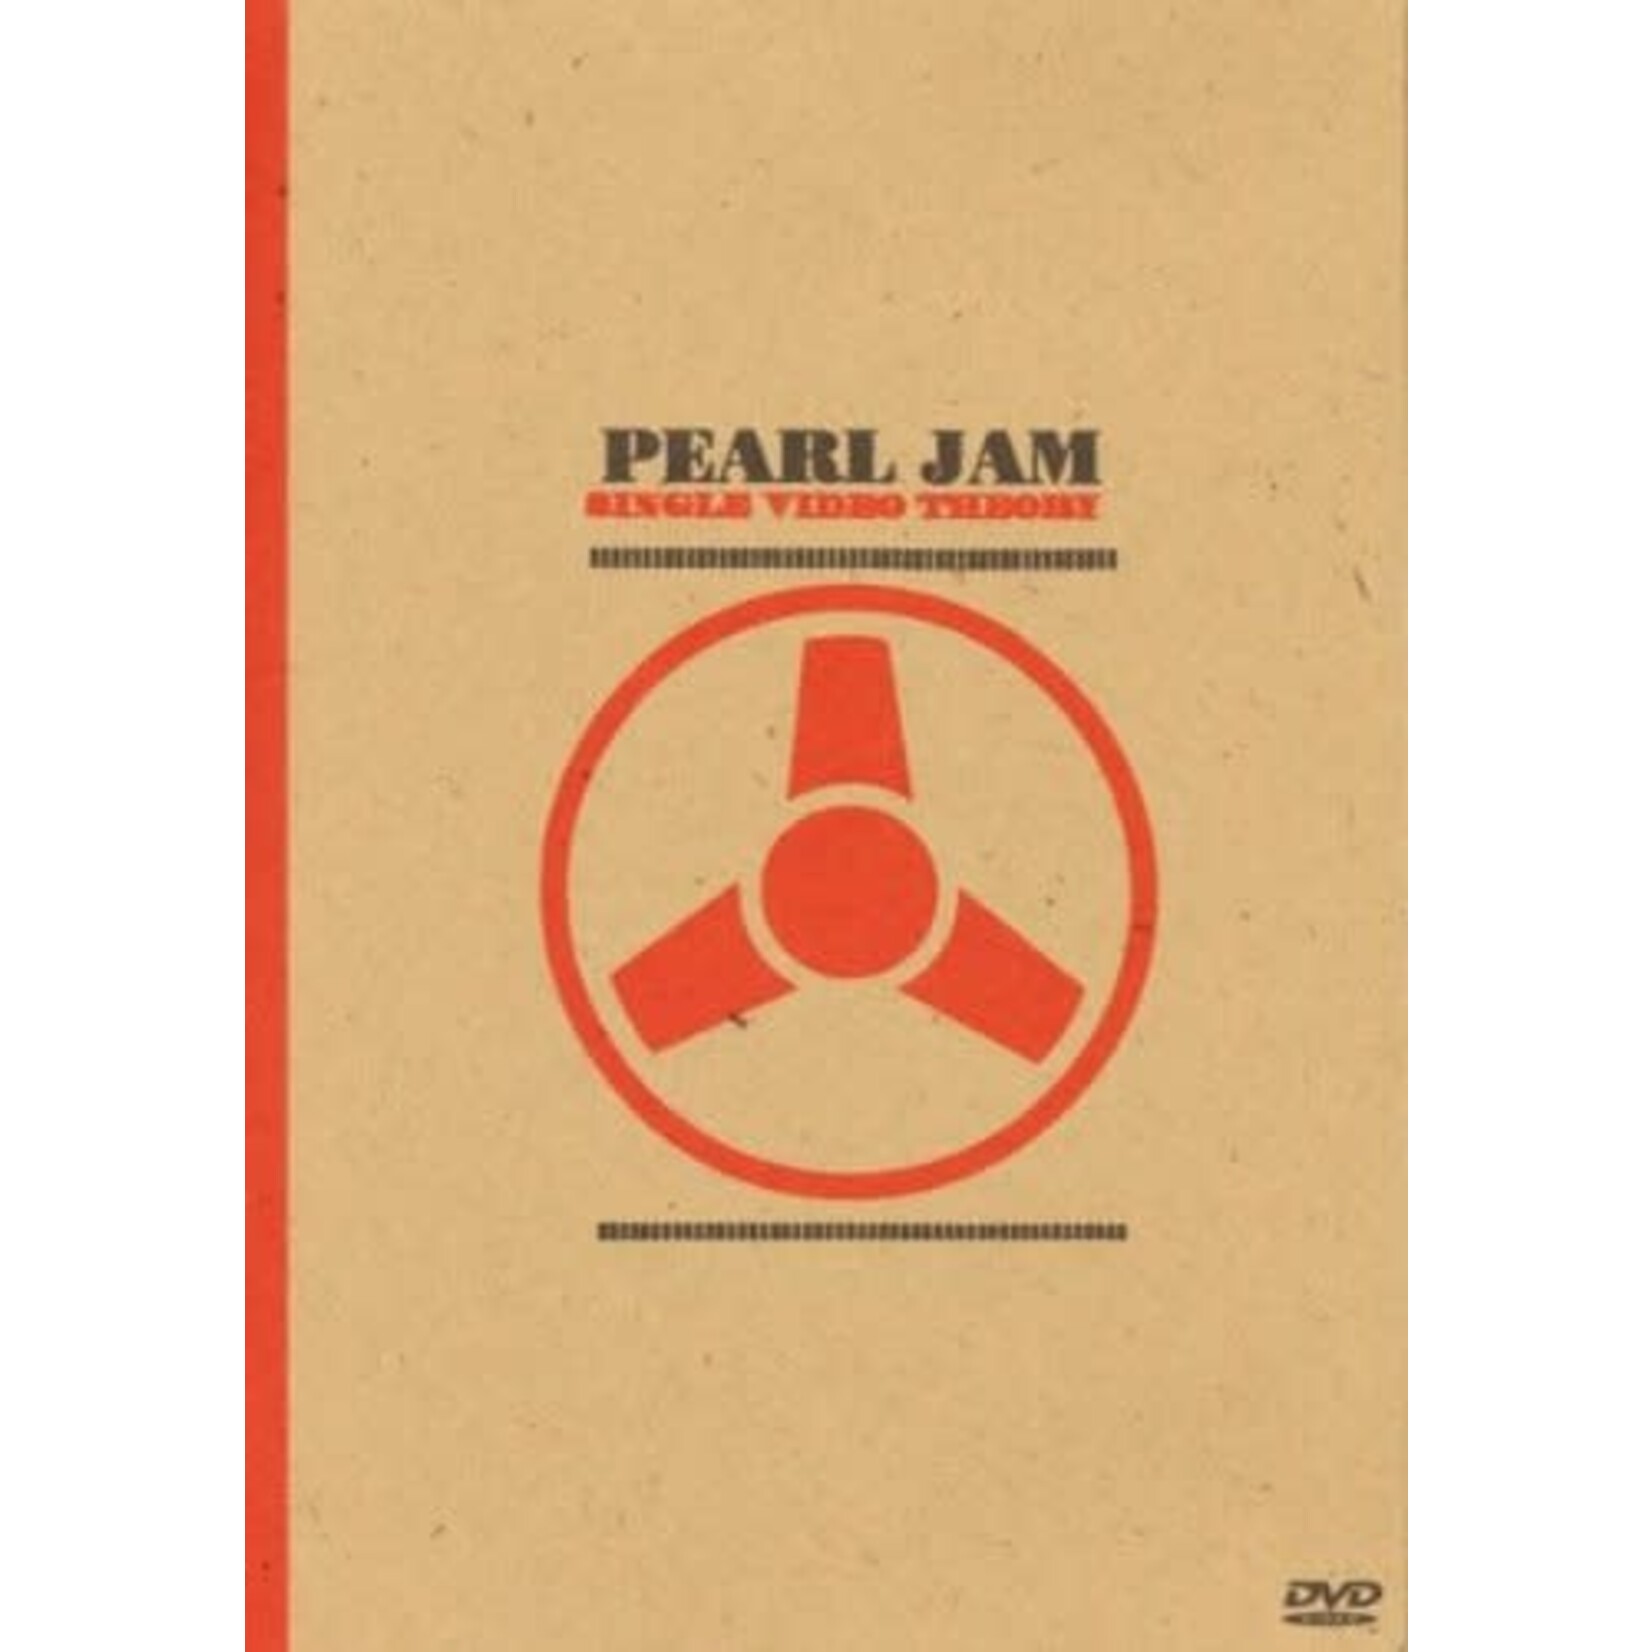 Pearl Jam - Single Video Theory [USED DVD]